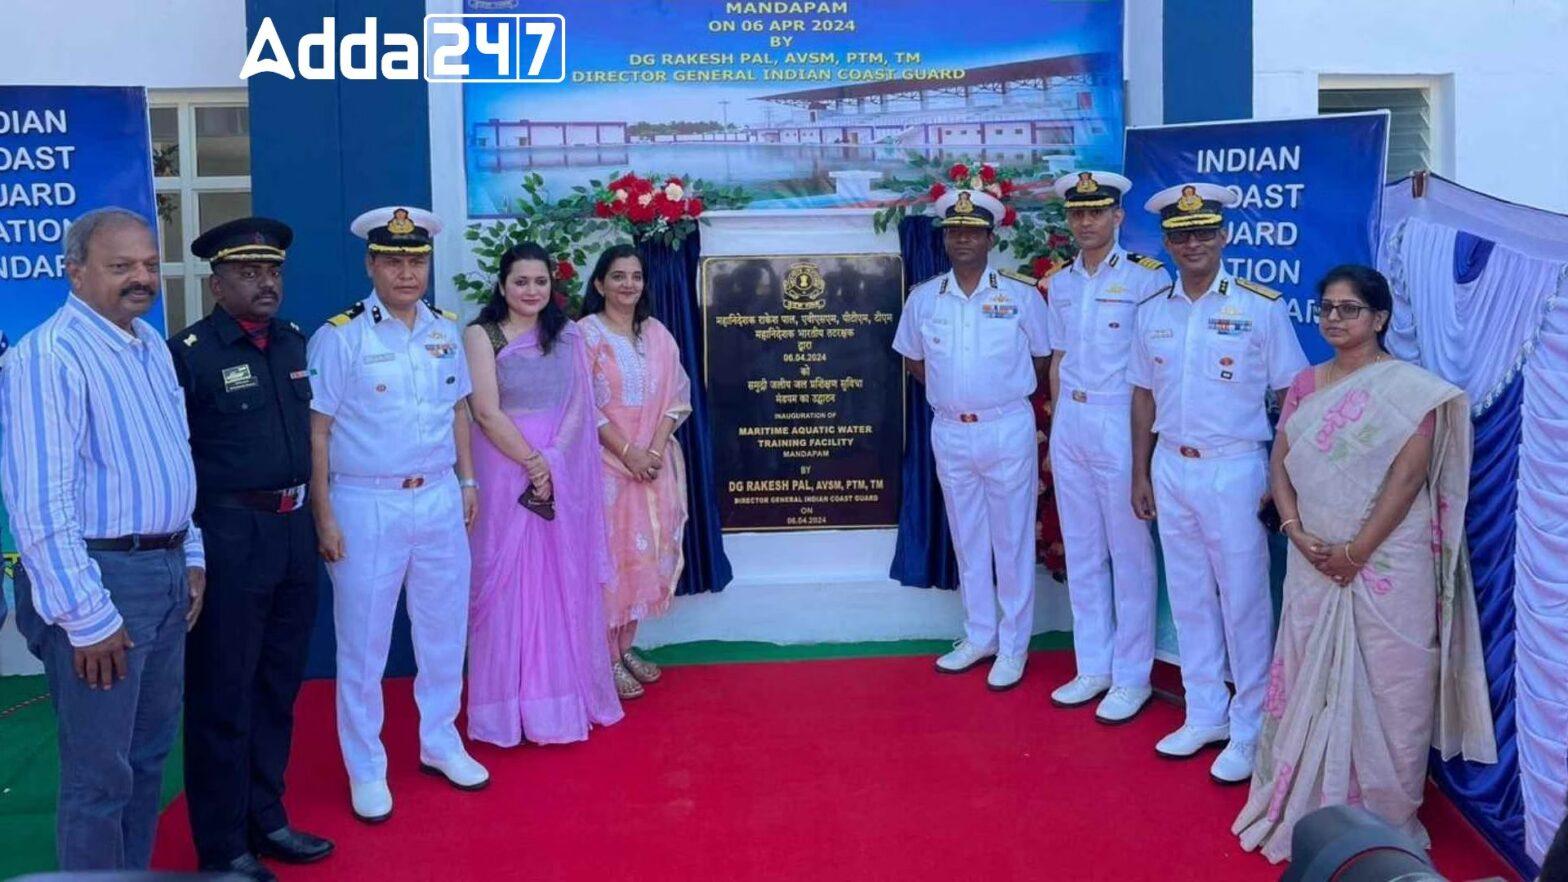 Indian Coast Guard Inaugurates Aquatic Centre at Mandapam, Tamil Nadu